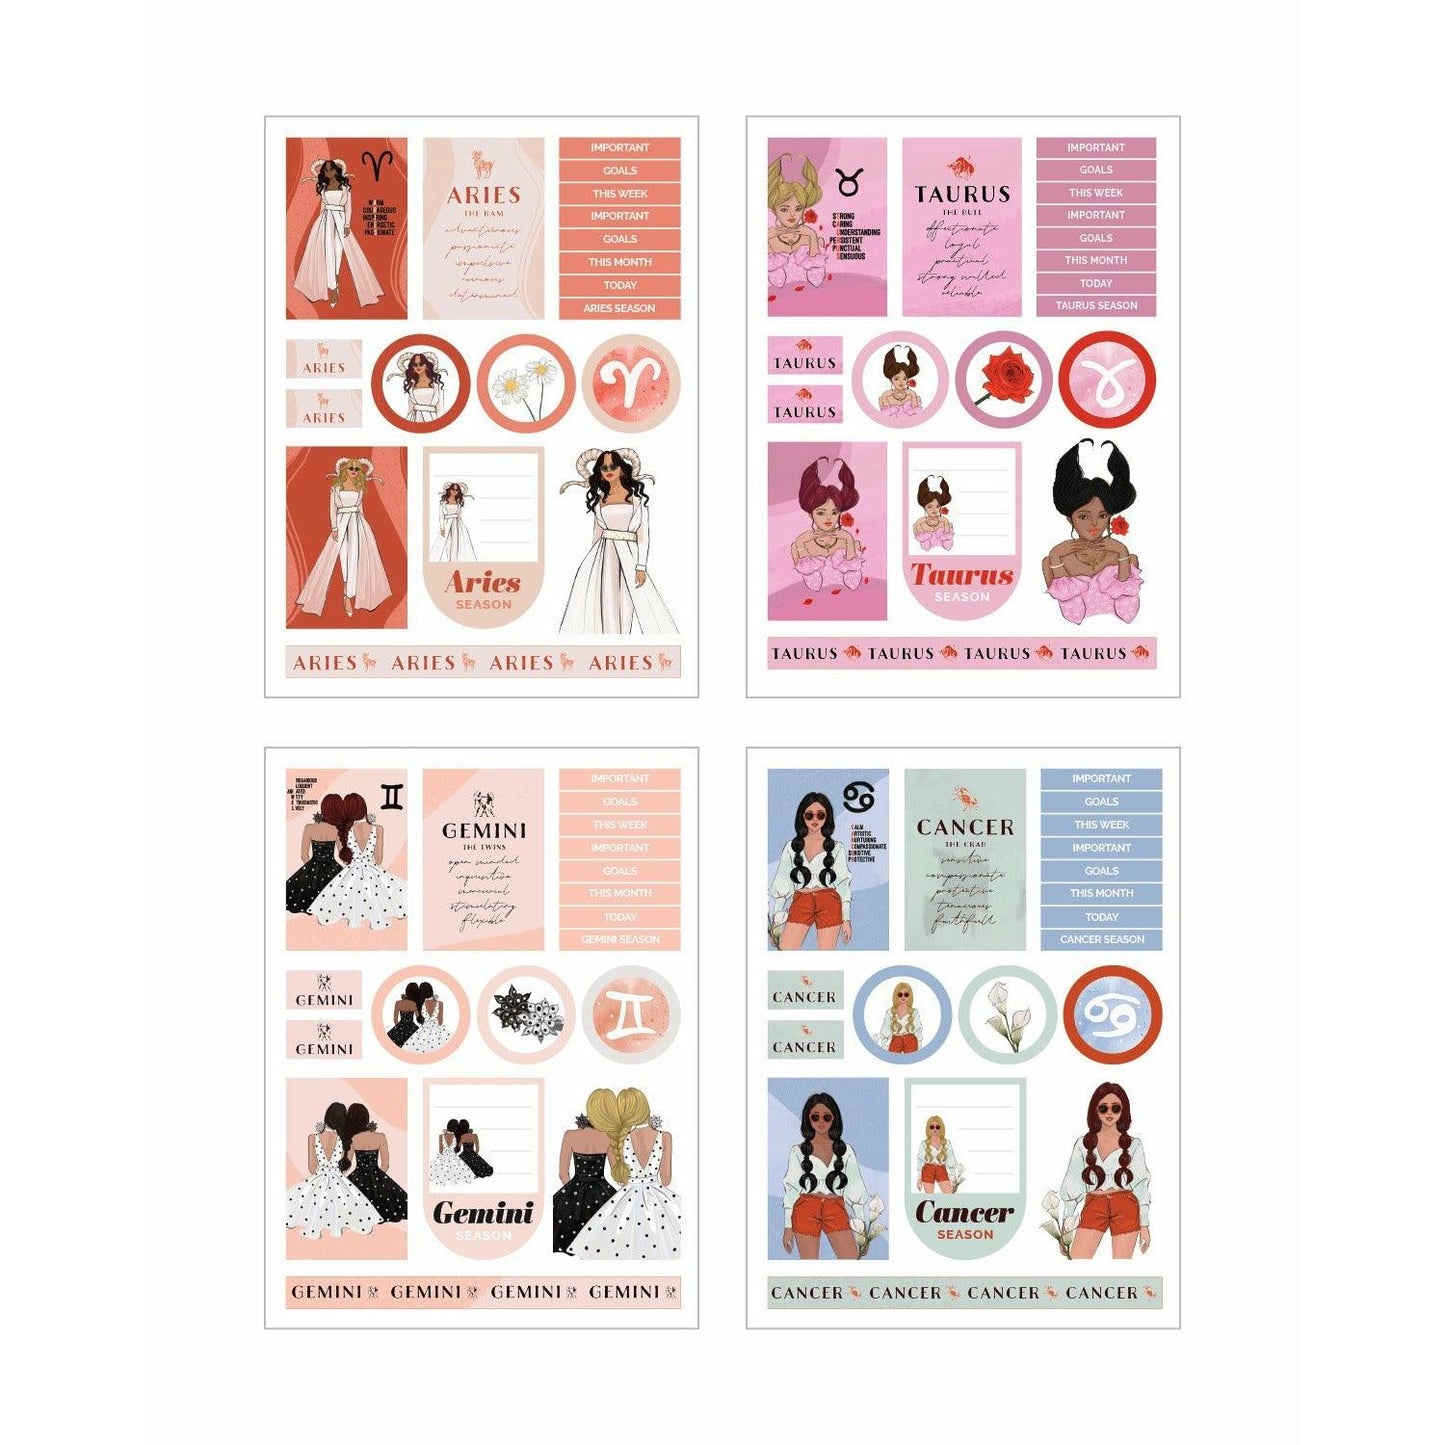 Zodiac sticker pack (Set of 6)